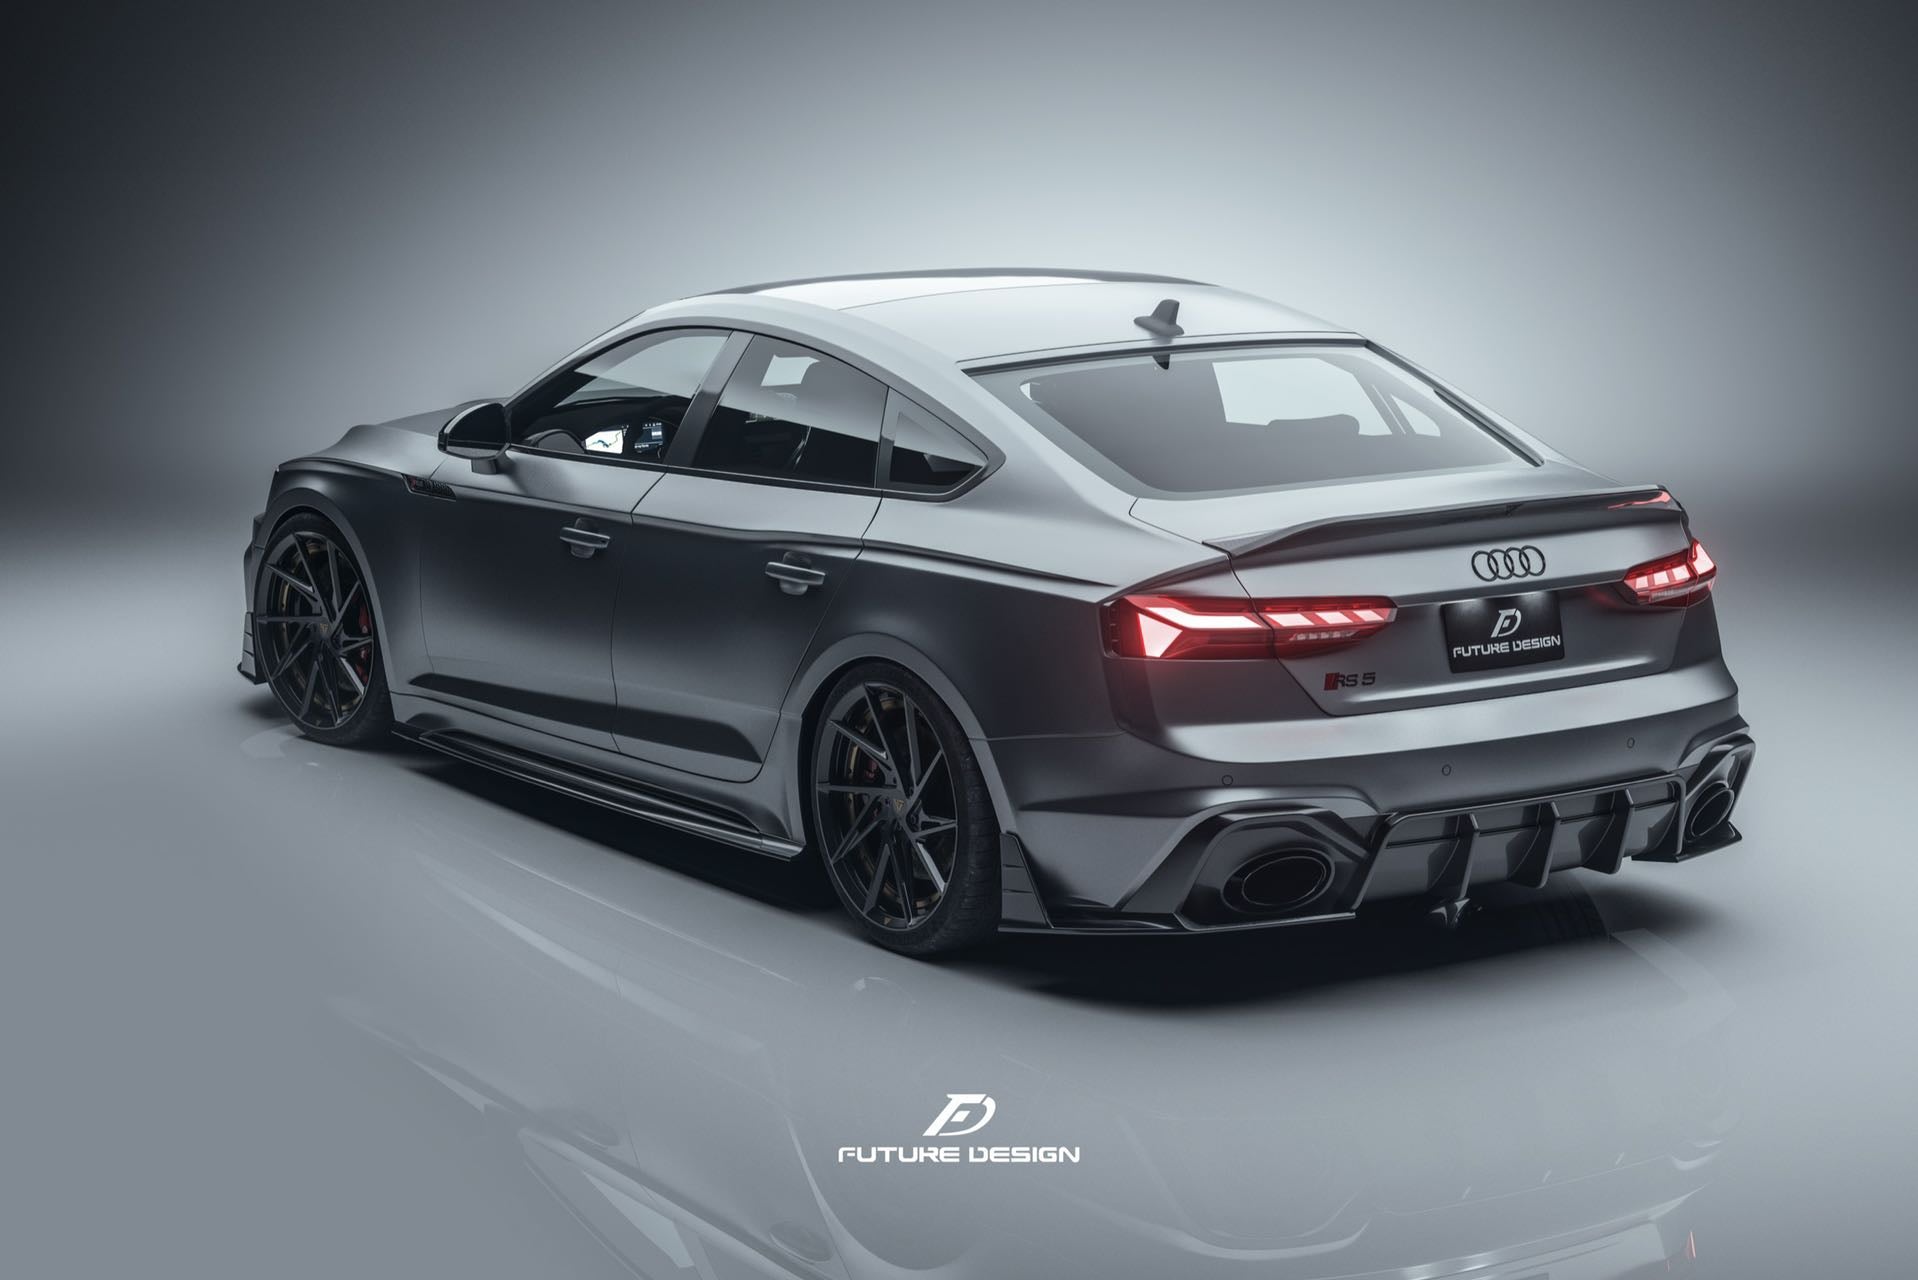 Future Design Carbon Fiber REAR DIFFUSER & REAR CANARDS - "Blaze kit" for Audi RS5 B9.5 2020+